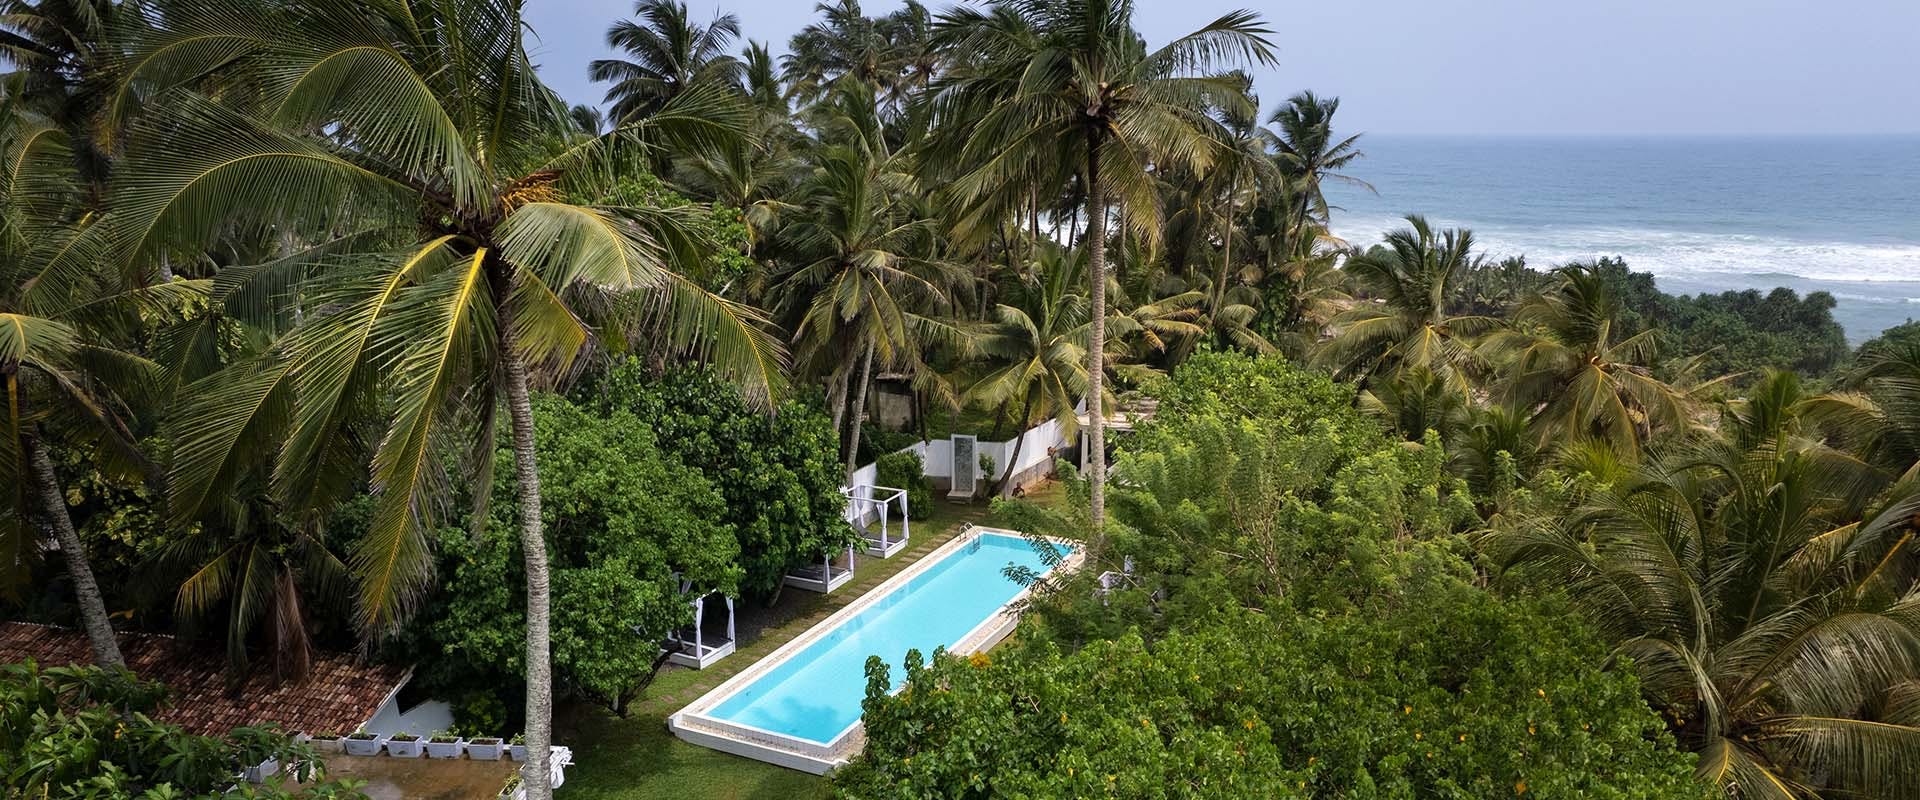 Ahangama Hotel and Villa Offer stay Sri Lanka